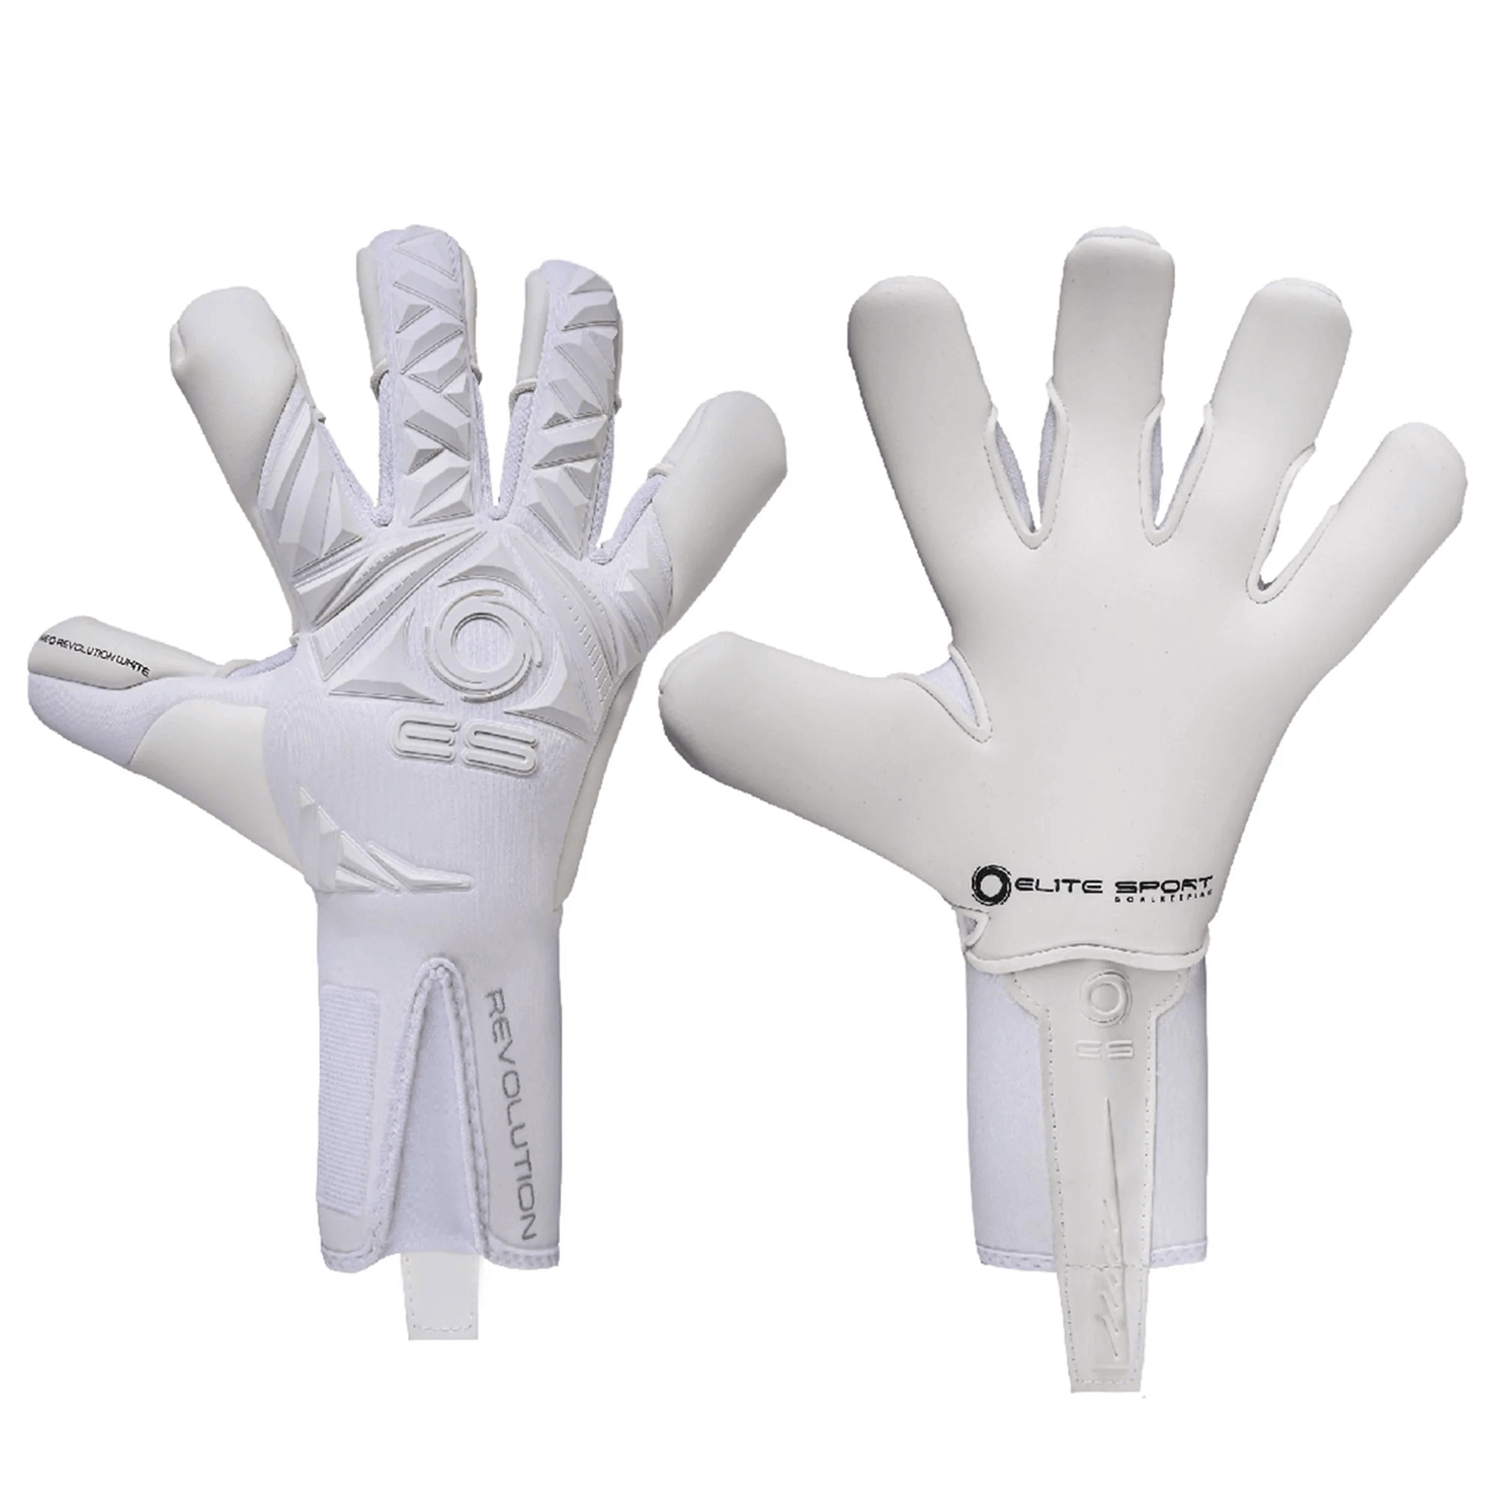 Elite Sport 2022 Neo Revolution White Goalkeeper Glove - White (Pair)